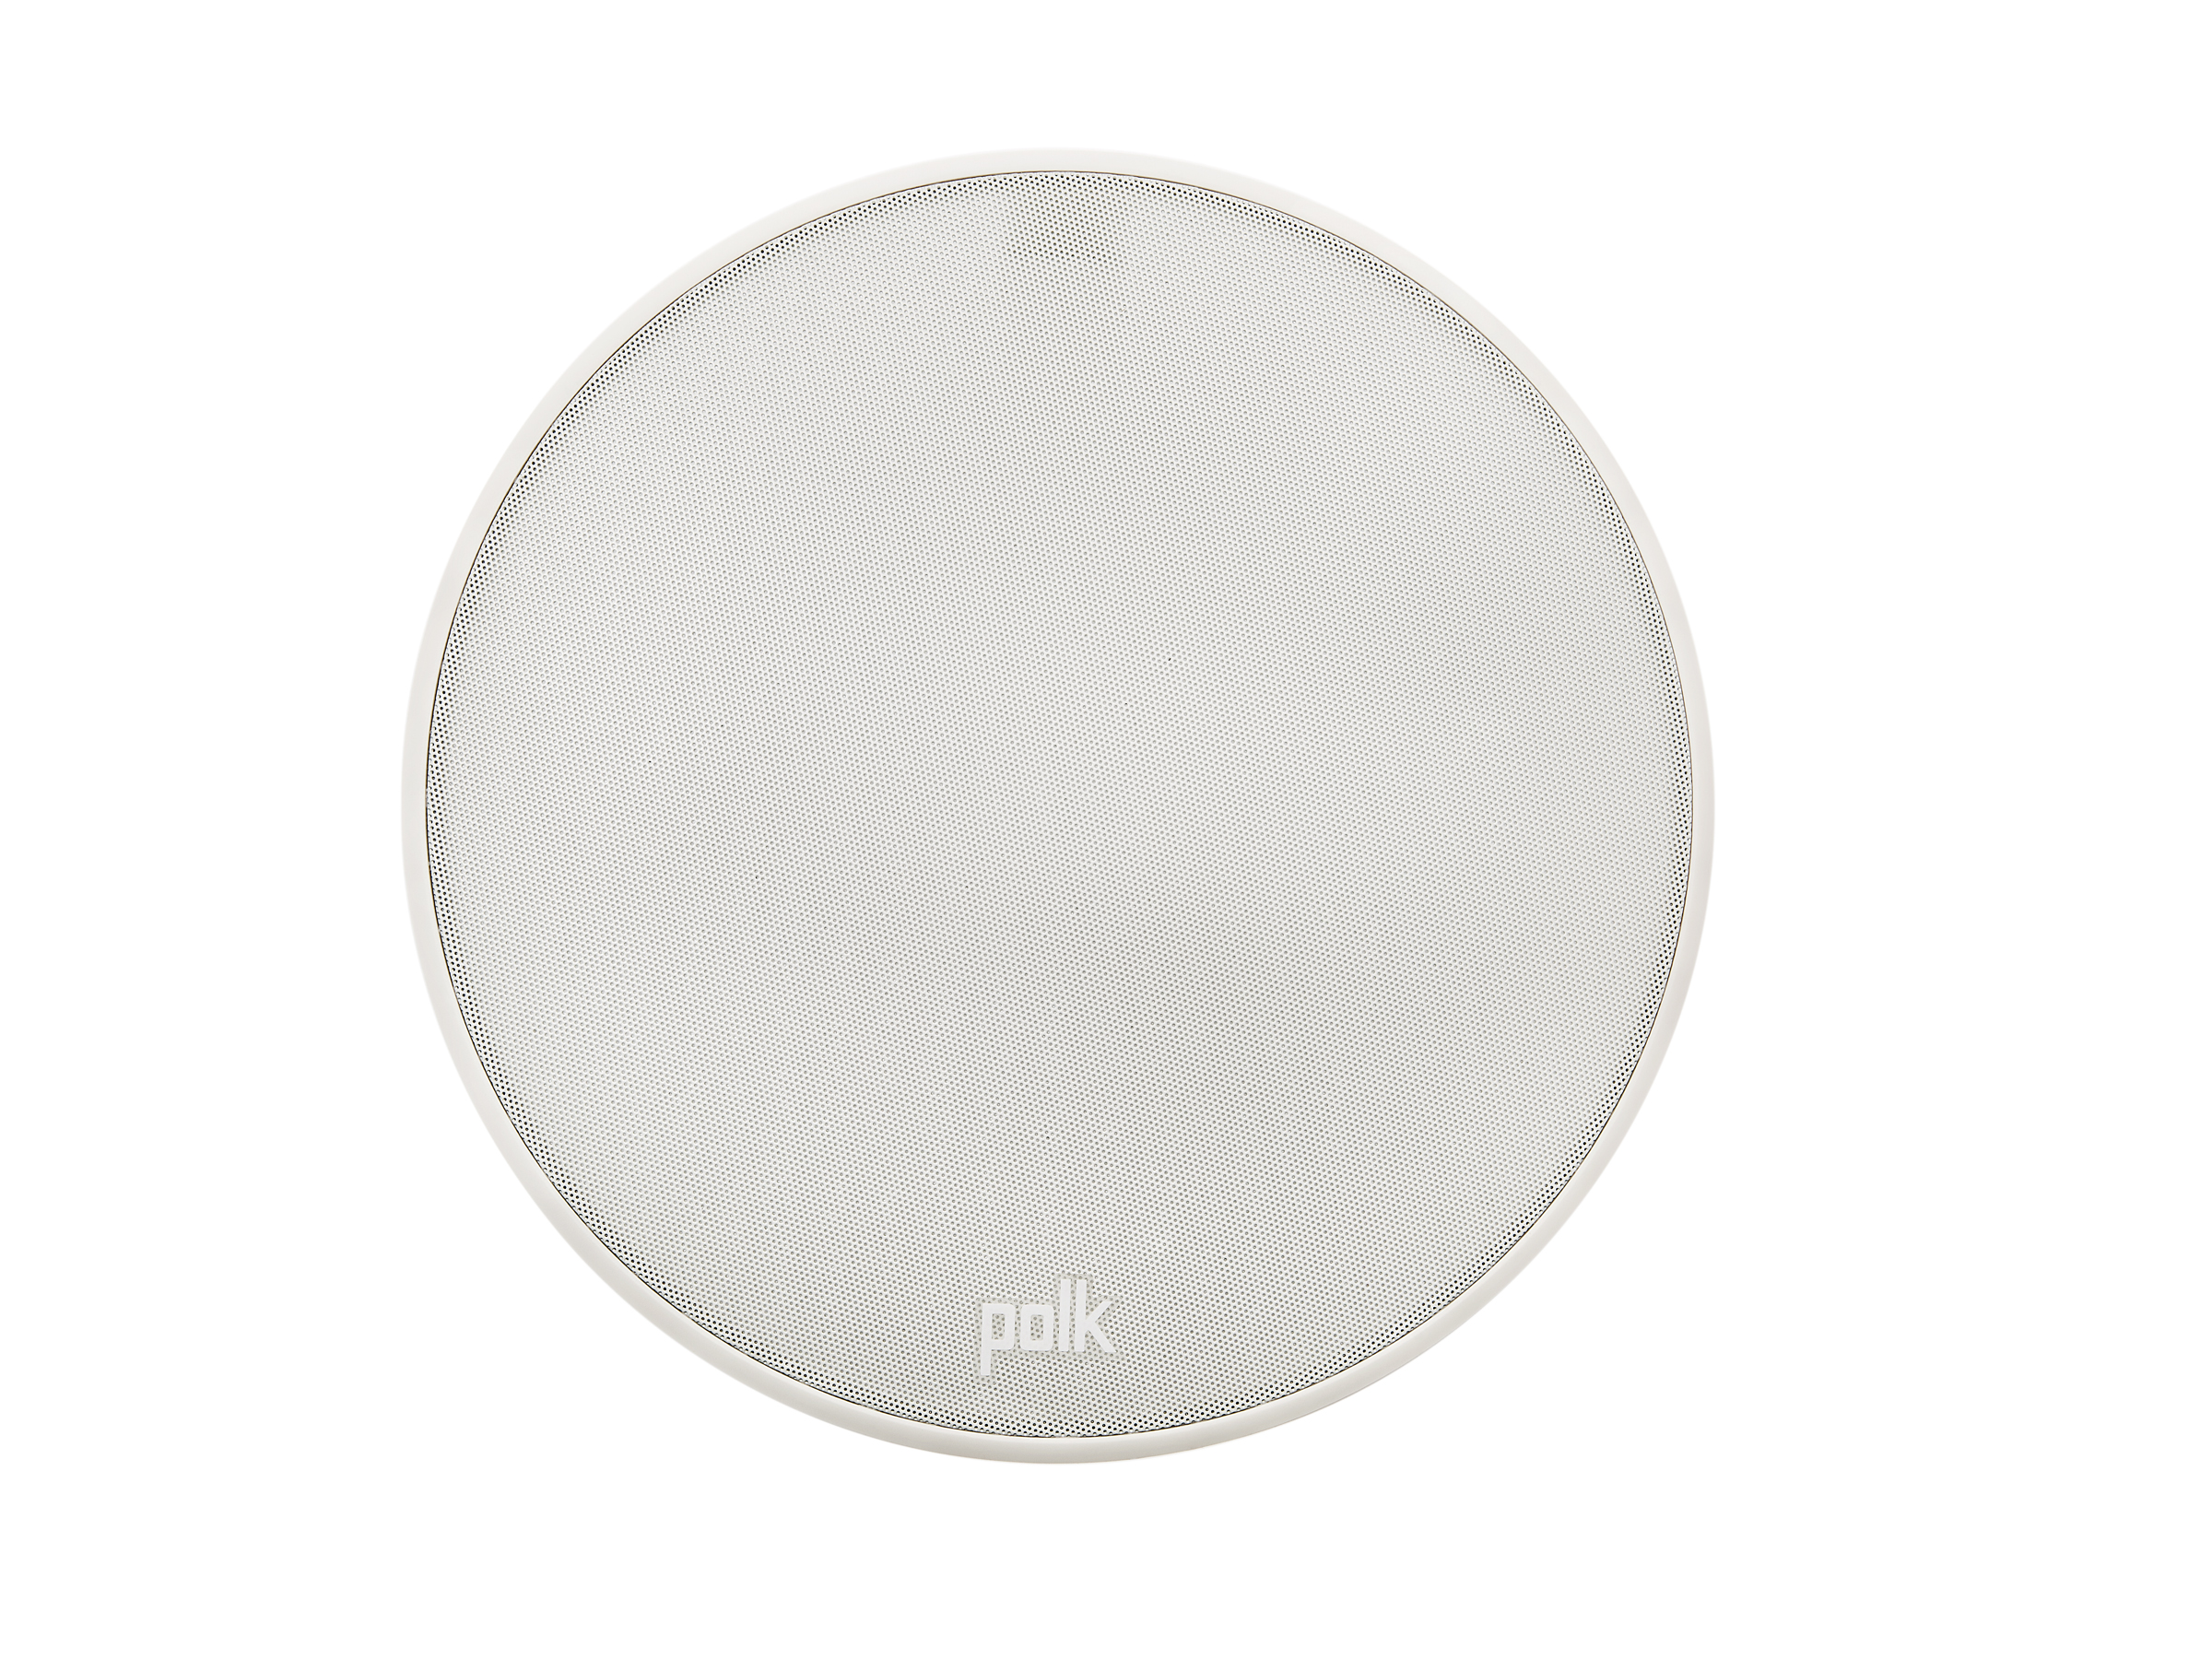 Polk Definitive Add To Custom Speaker Lines